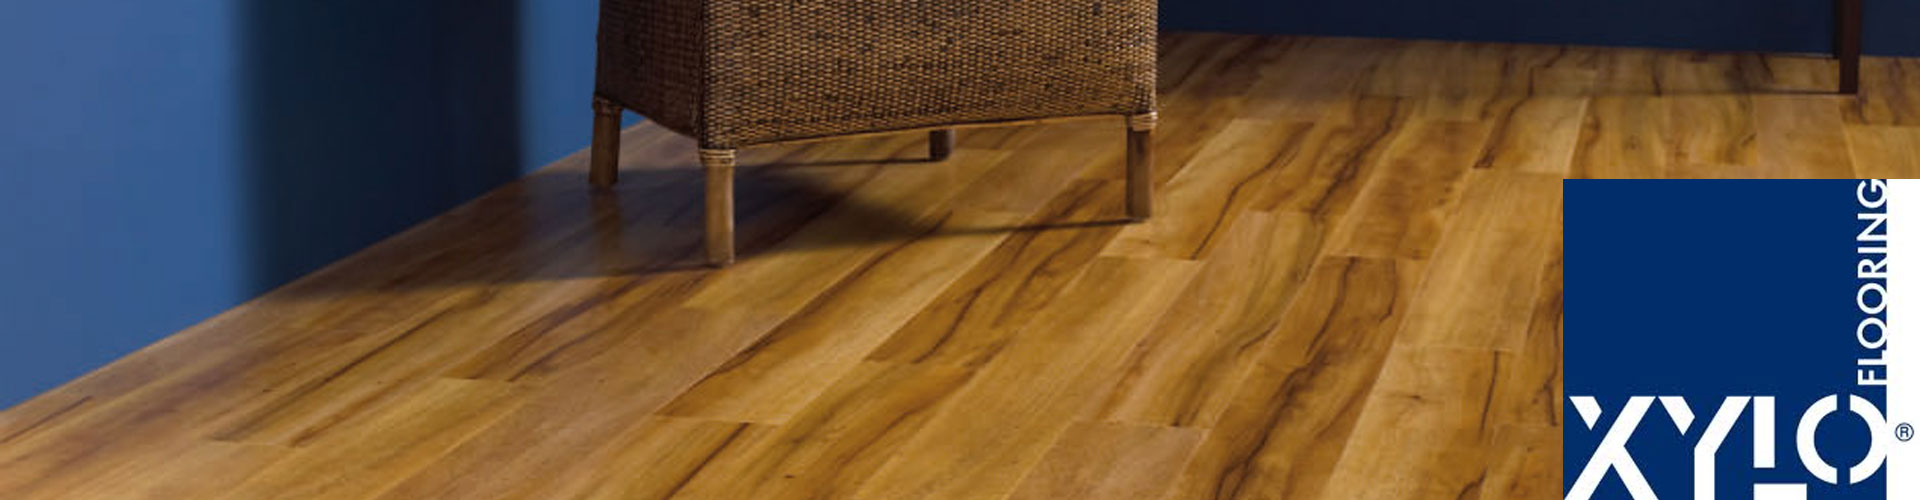 xylo-wood-flooring